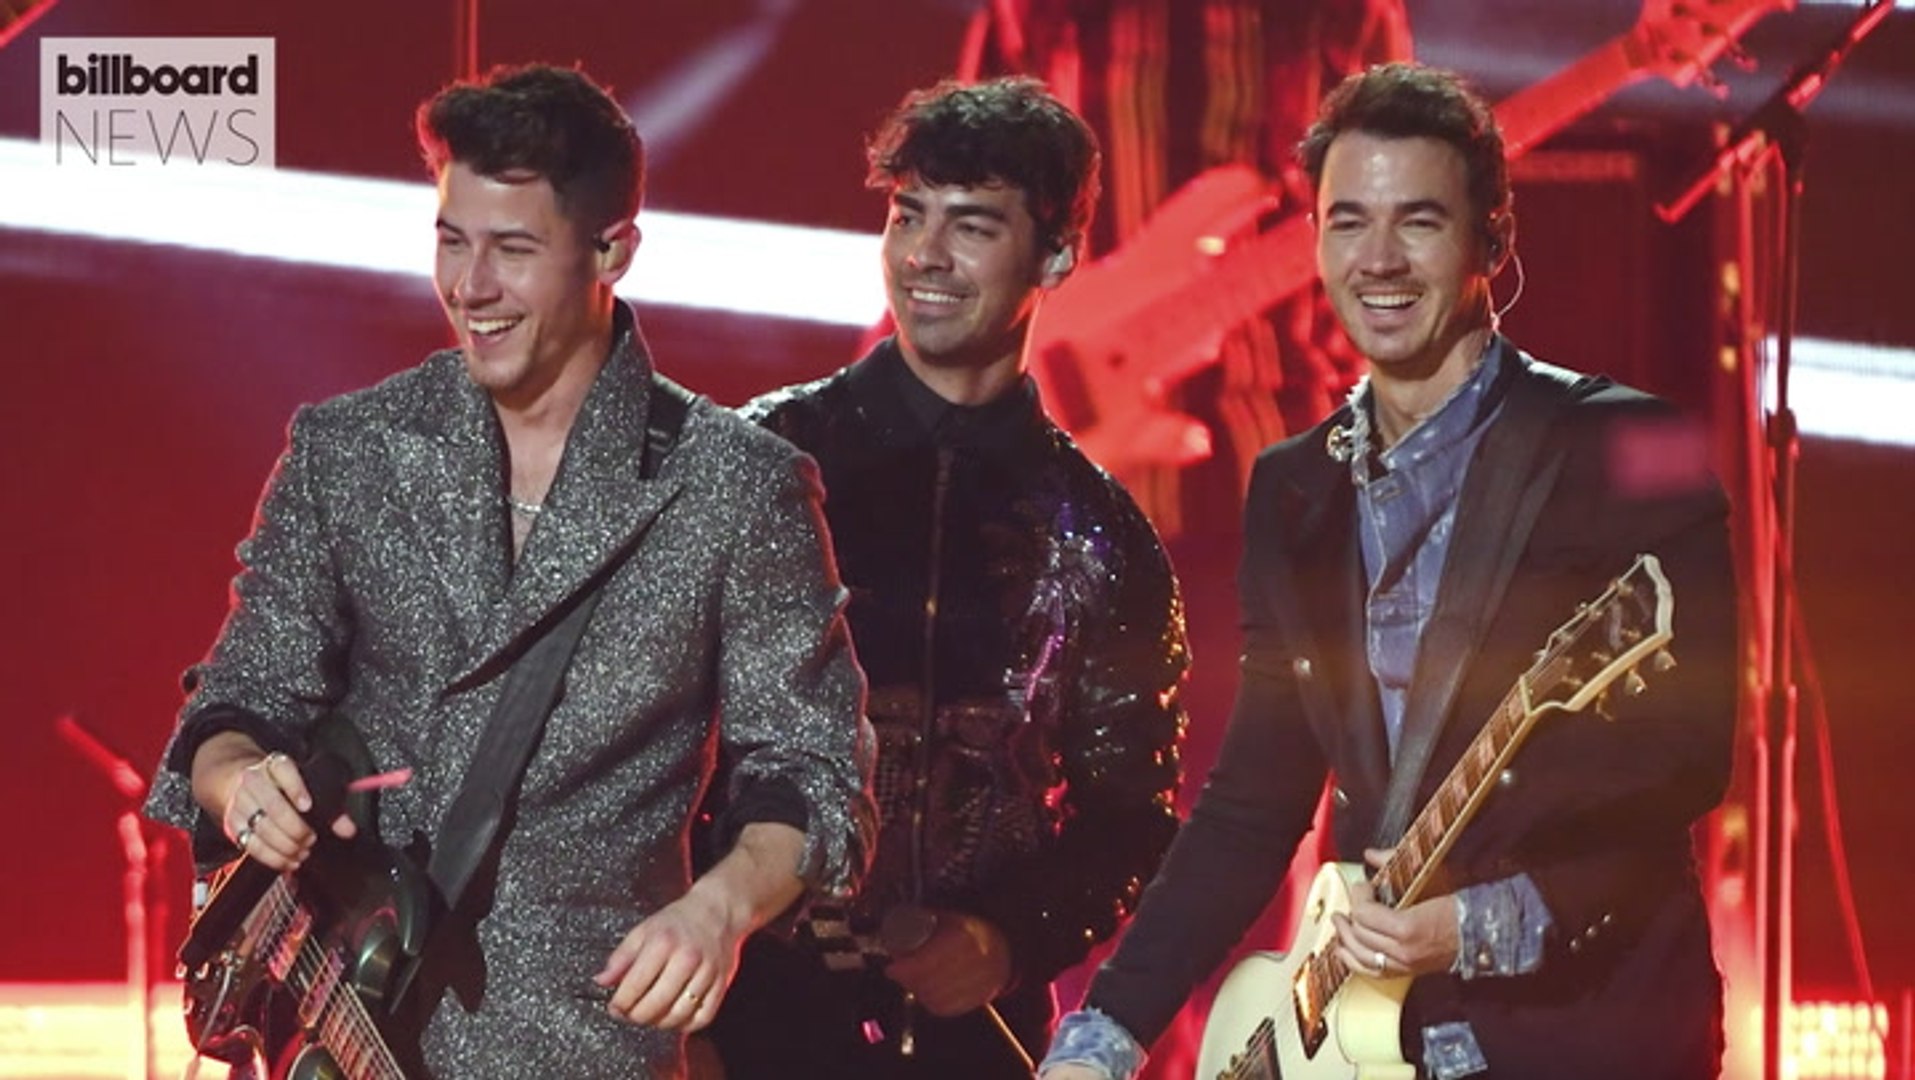 Jonas Brothers and Marshmello Performing at 2021 Billboard Music Awards | Billboard News